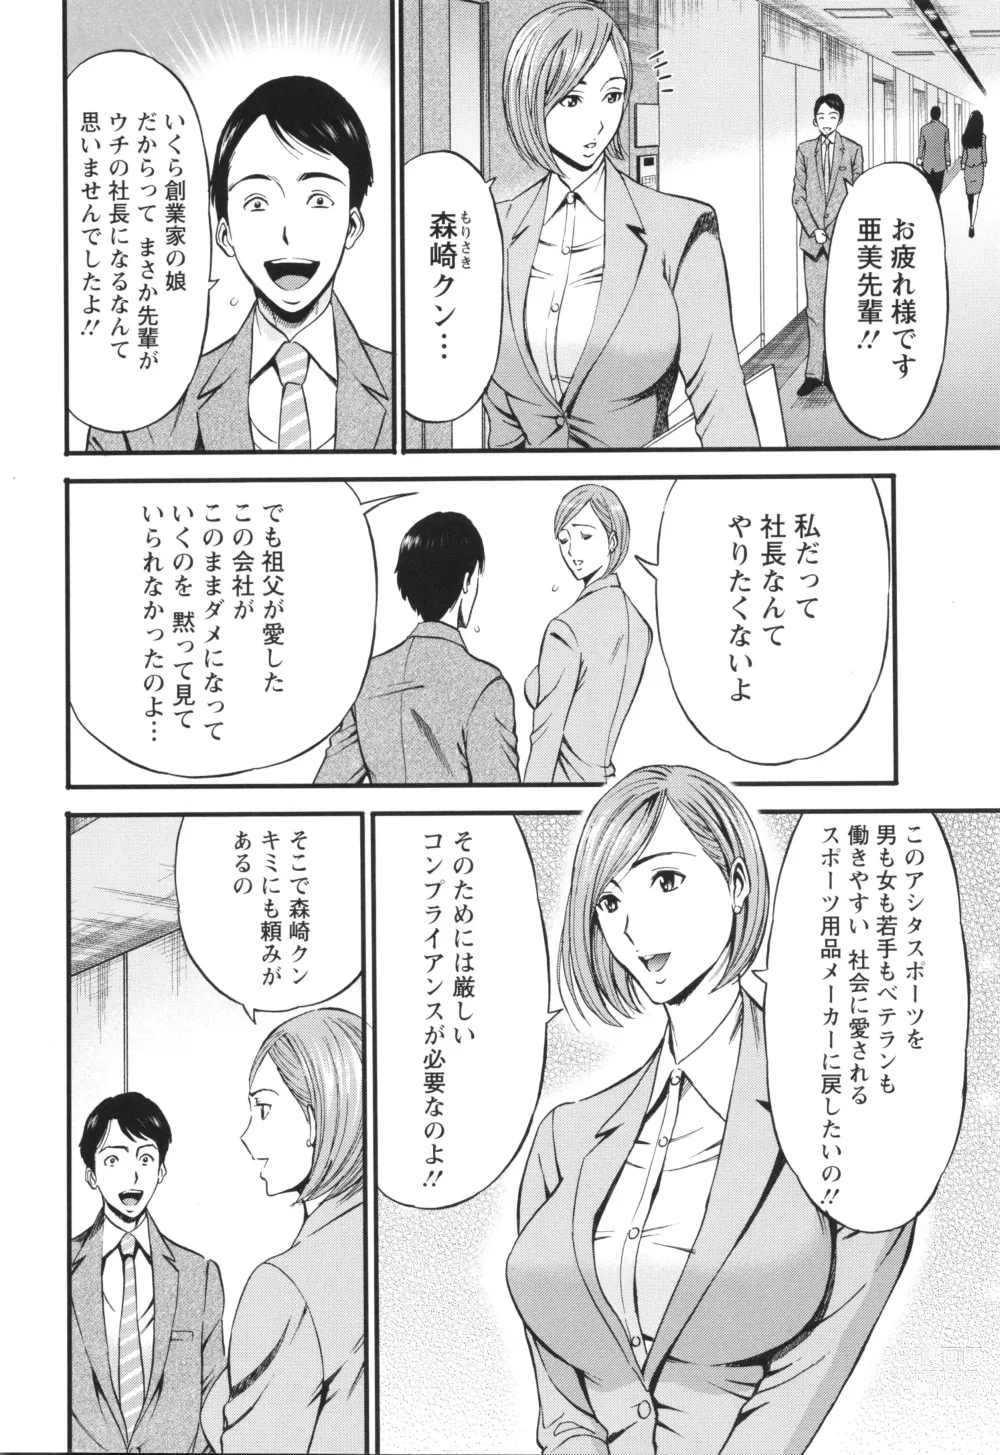 Page 10 of manga Compla Yuruyuru Chimari-san  - Chimaris compliance awareness is very lax.